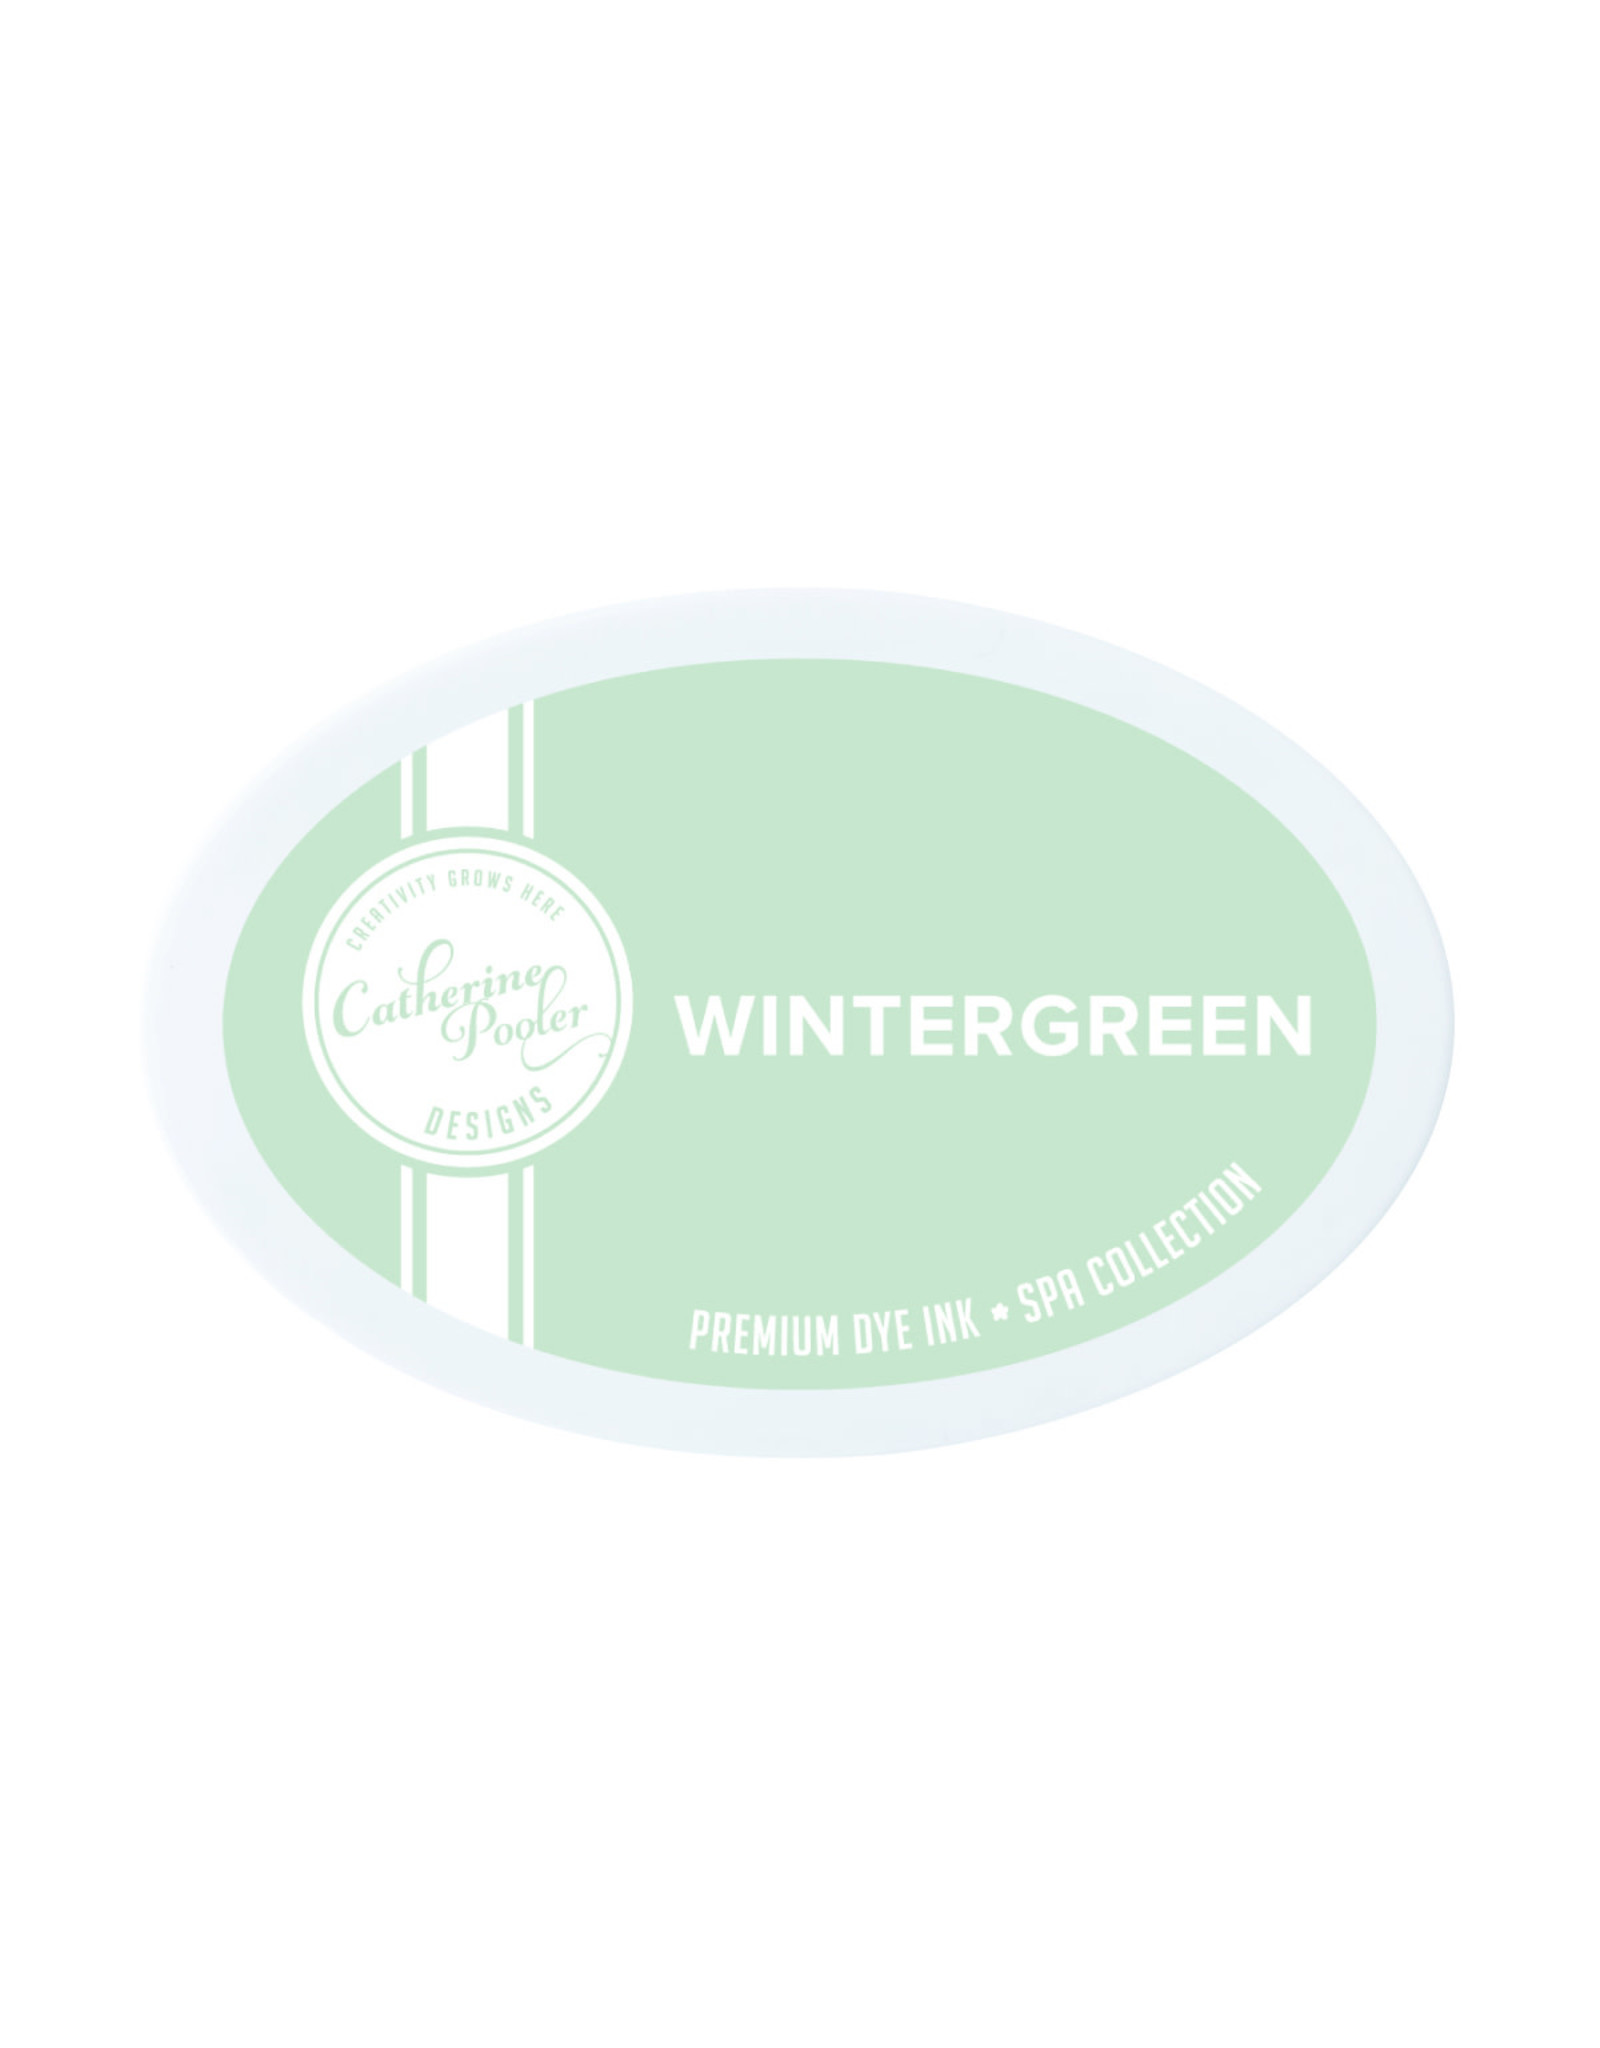 Catherine Pooler Designs Wintergreen Ink pad